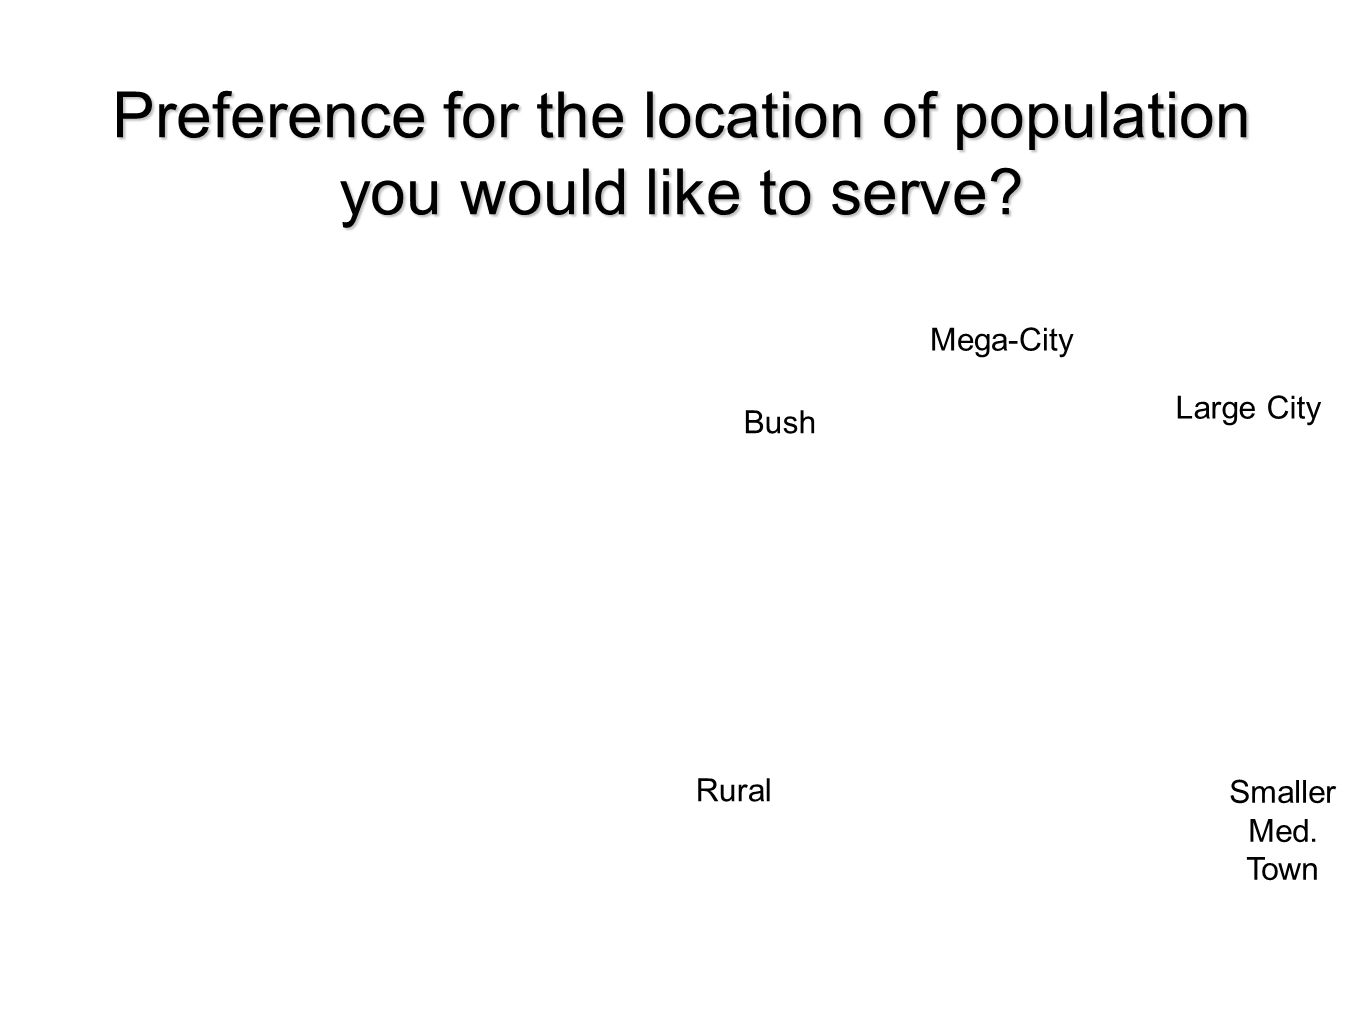 No Preference Have Preference Mega-City Large City Smaller Med.